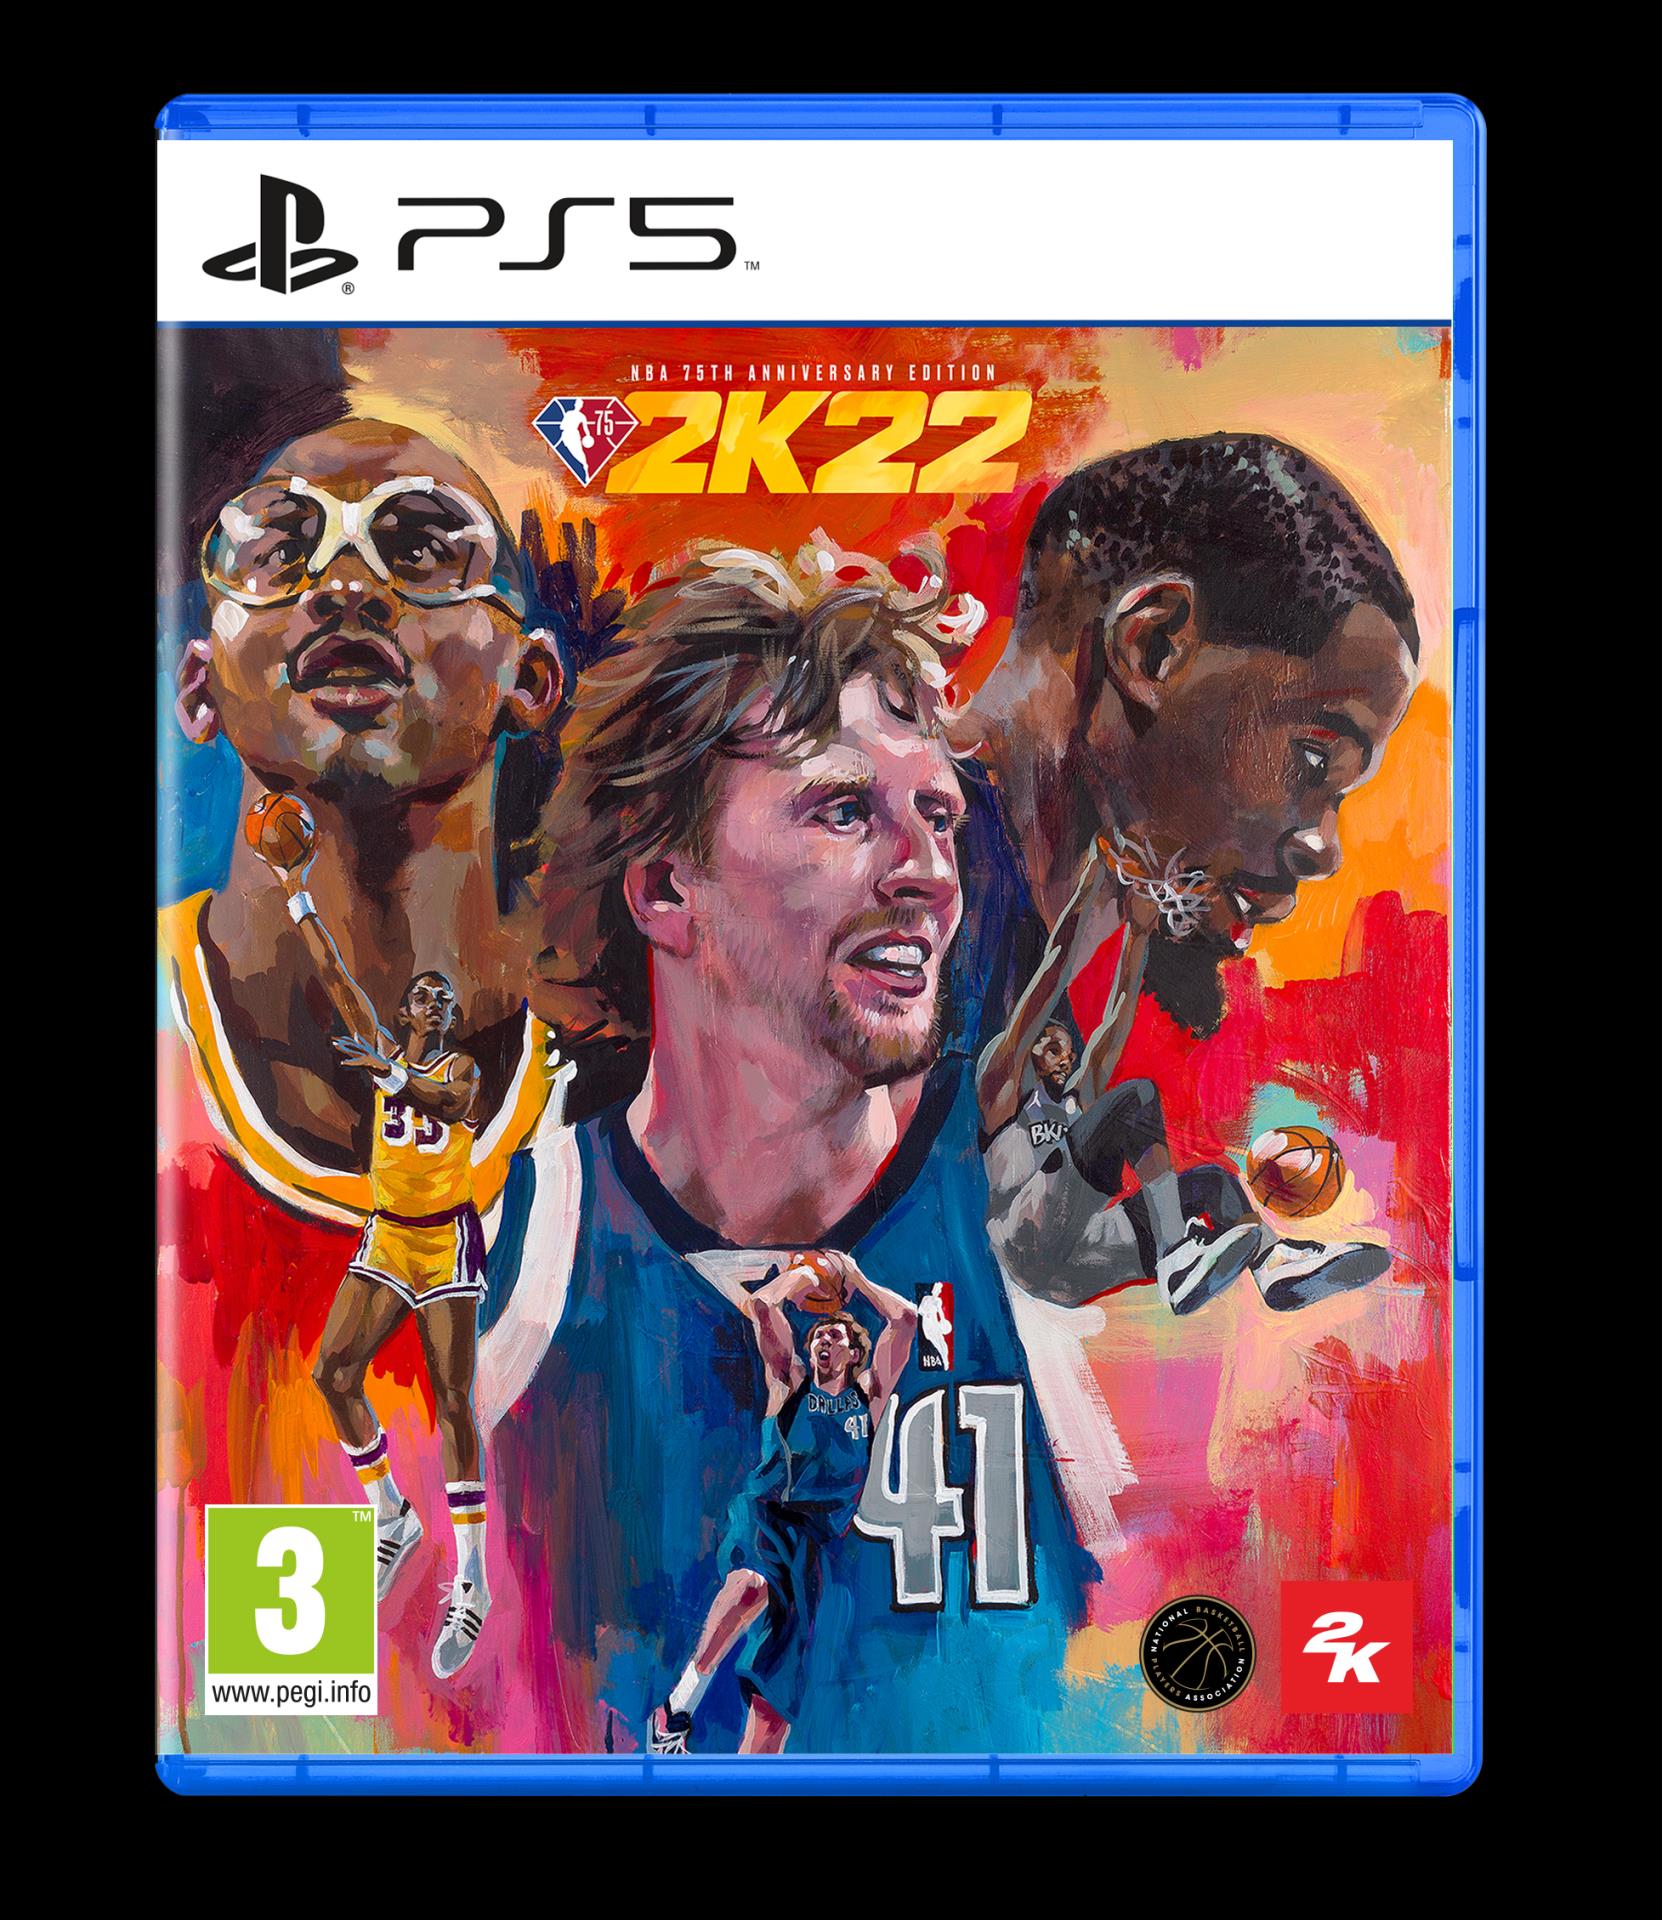 § NBA 2K22 75th Anniversary Edition